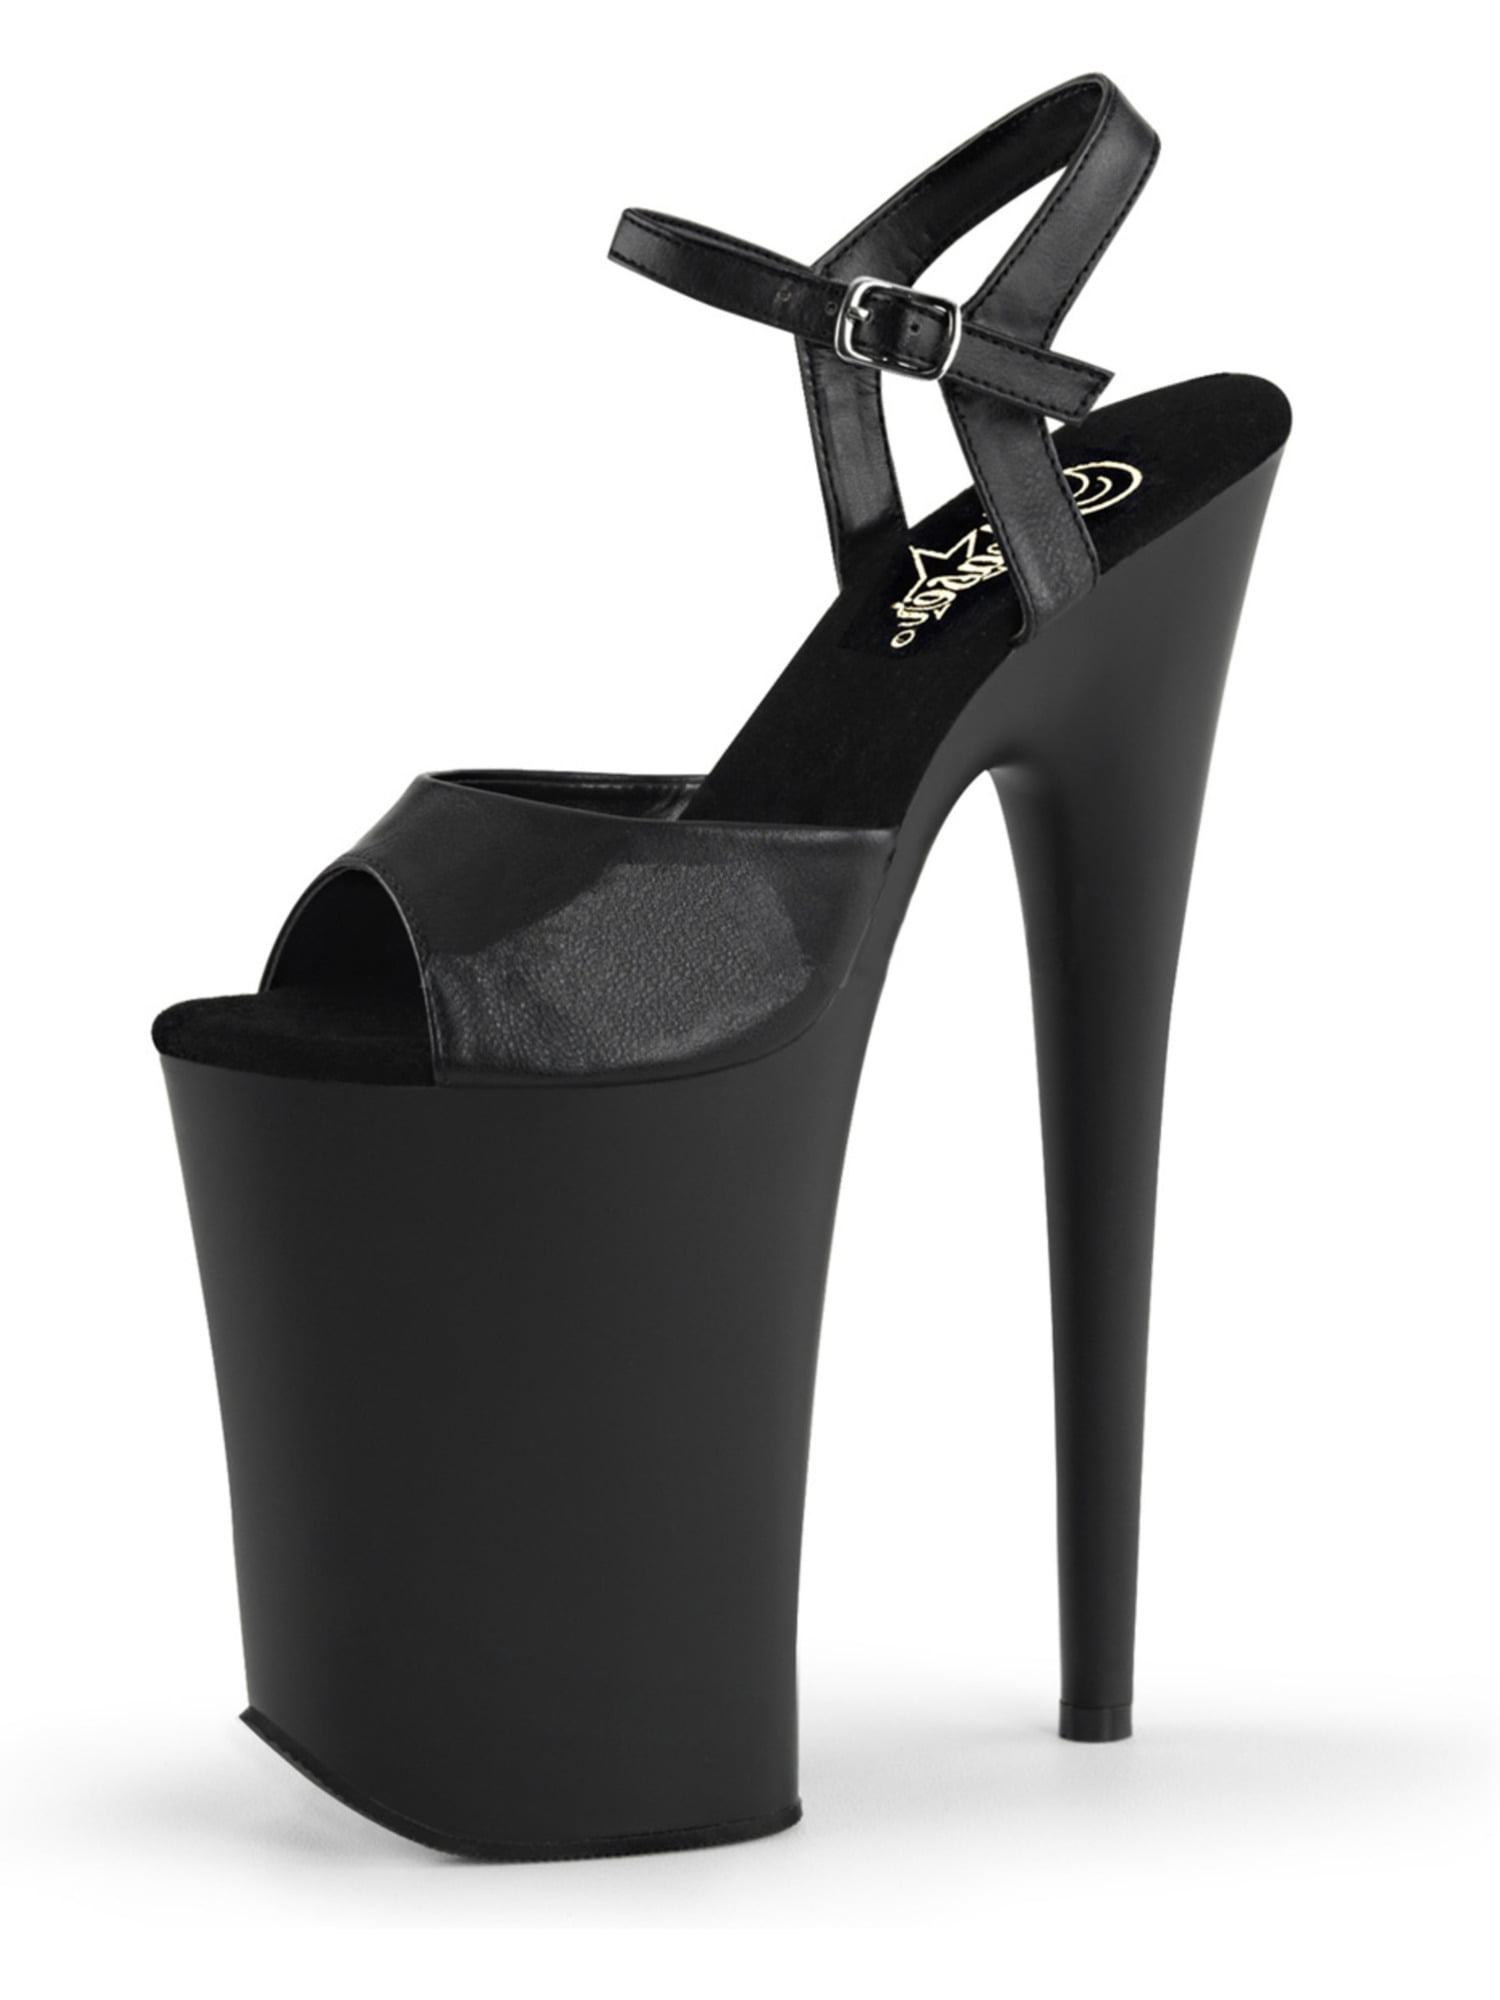 9 inch platform heels